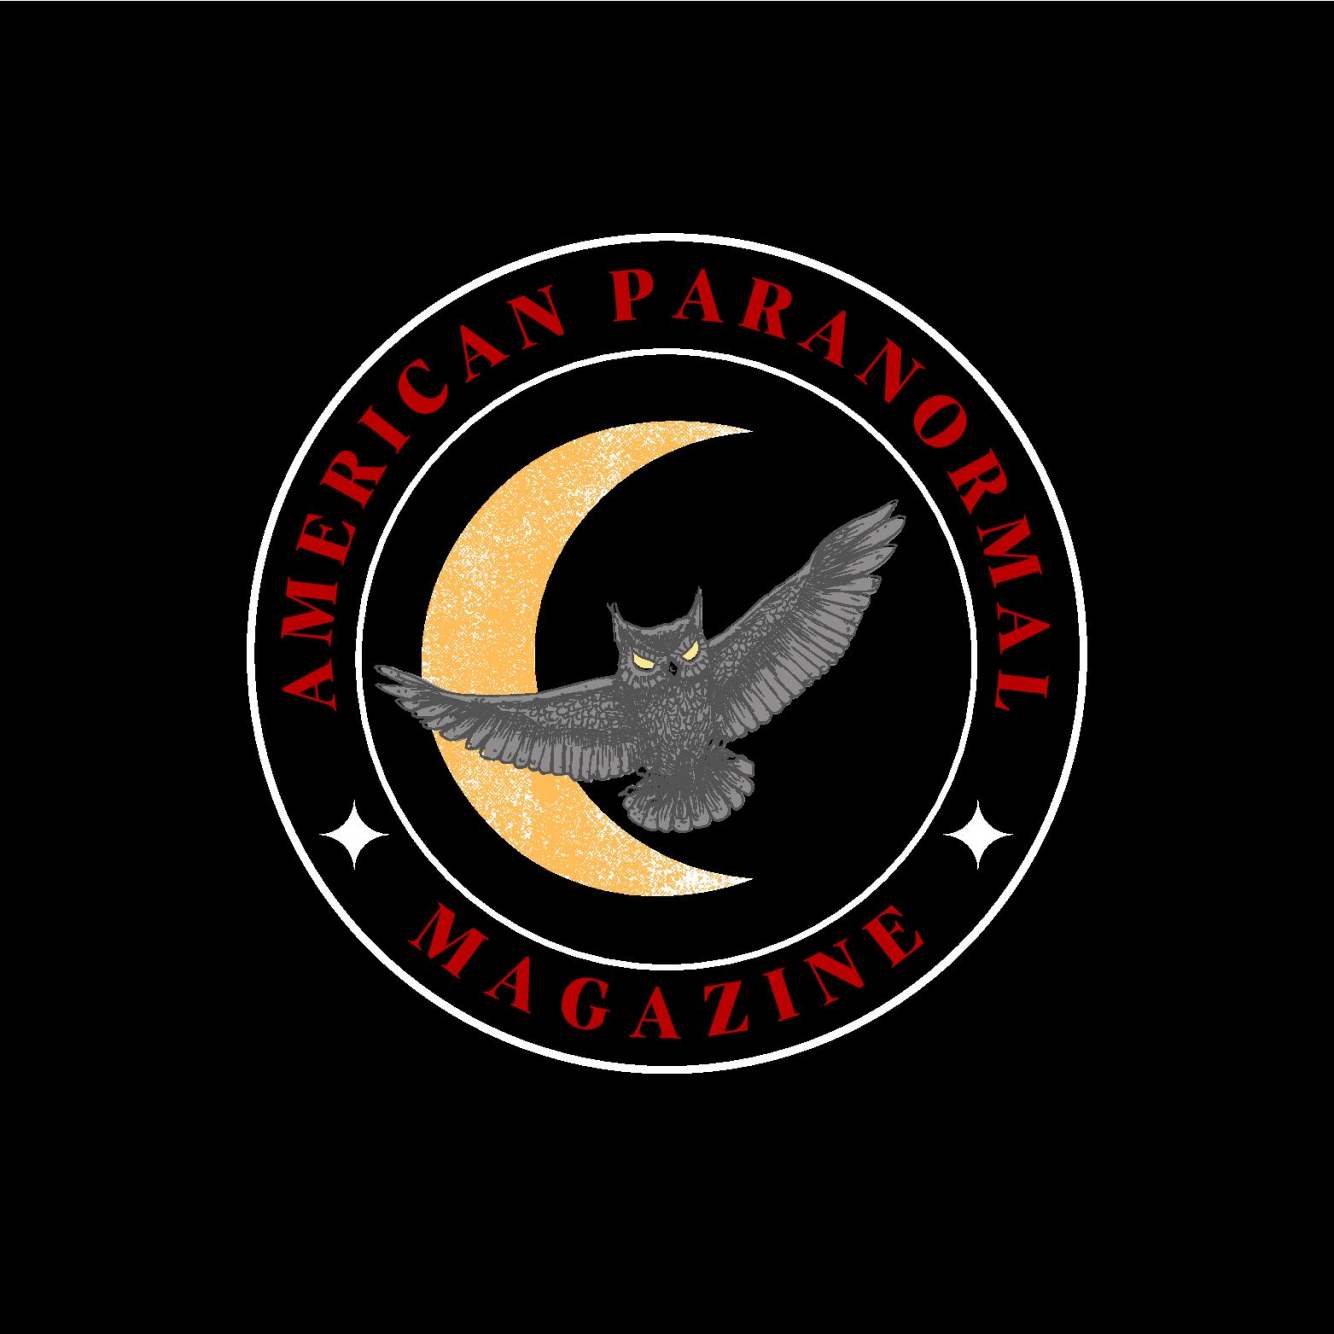 American Paranormal Magazine Logo